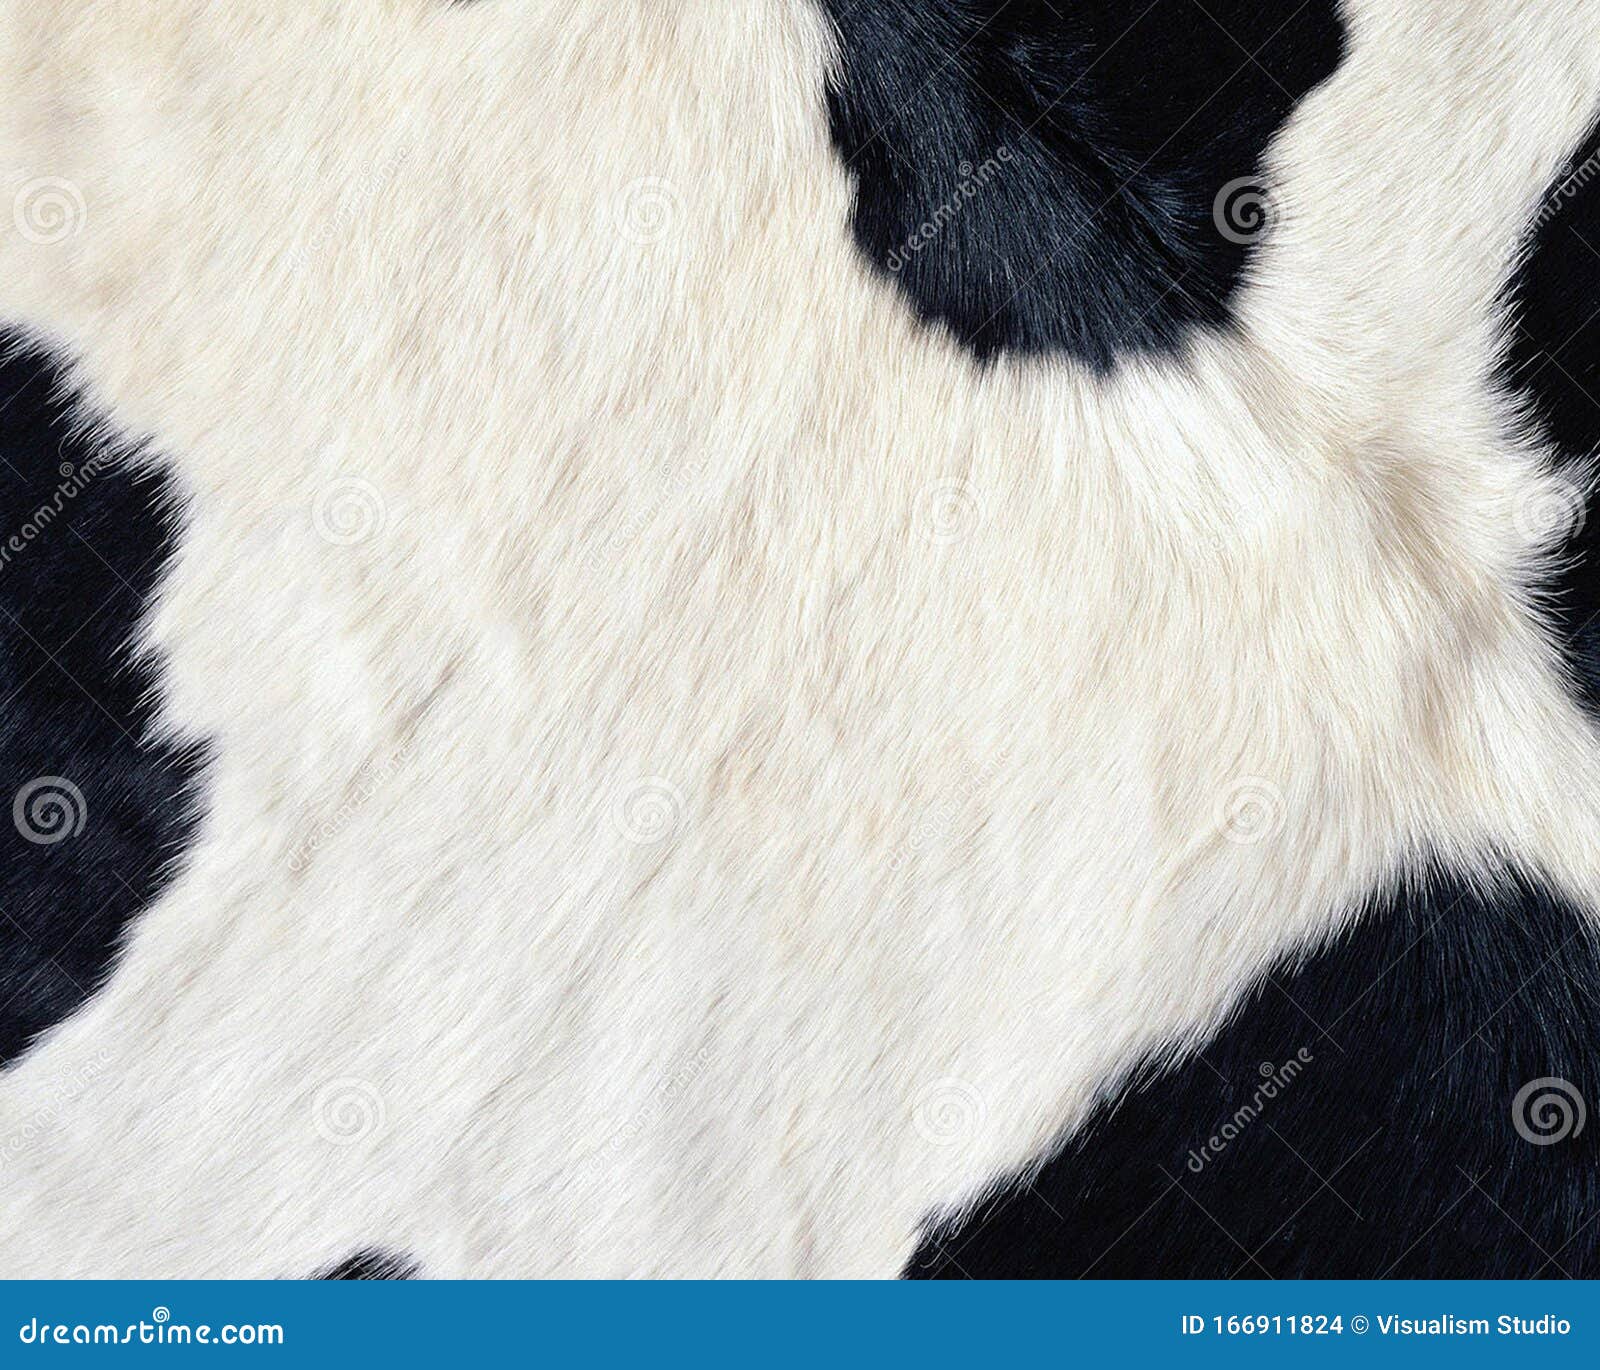 panda skin pattern texture repeating monochrome texture animal prints background